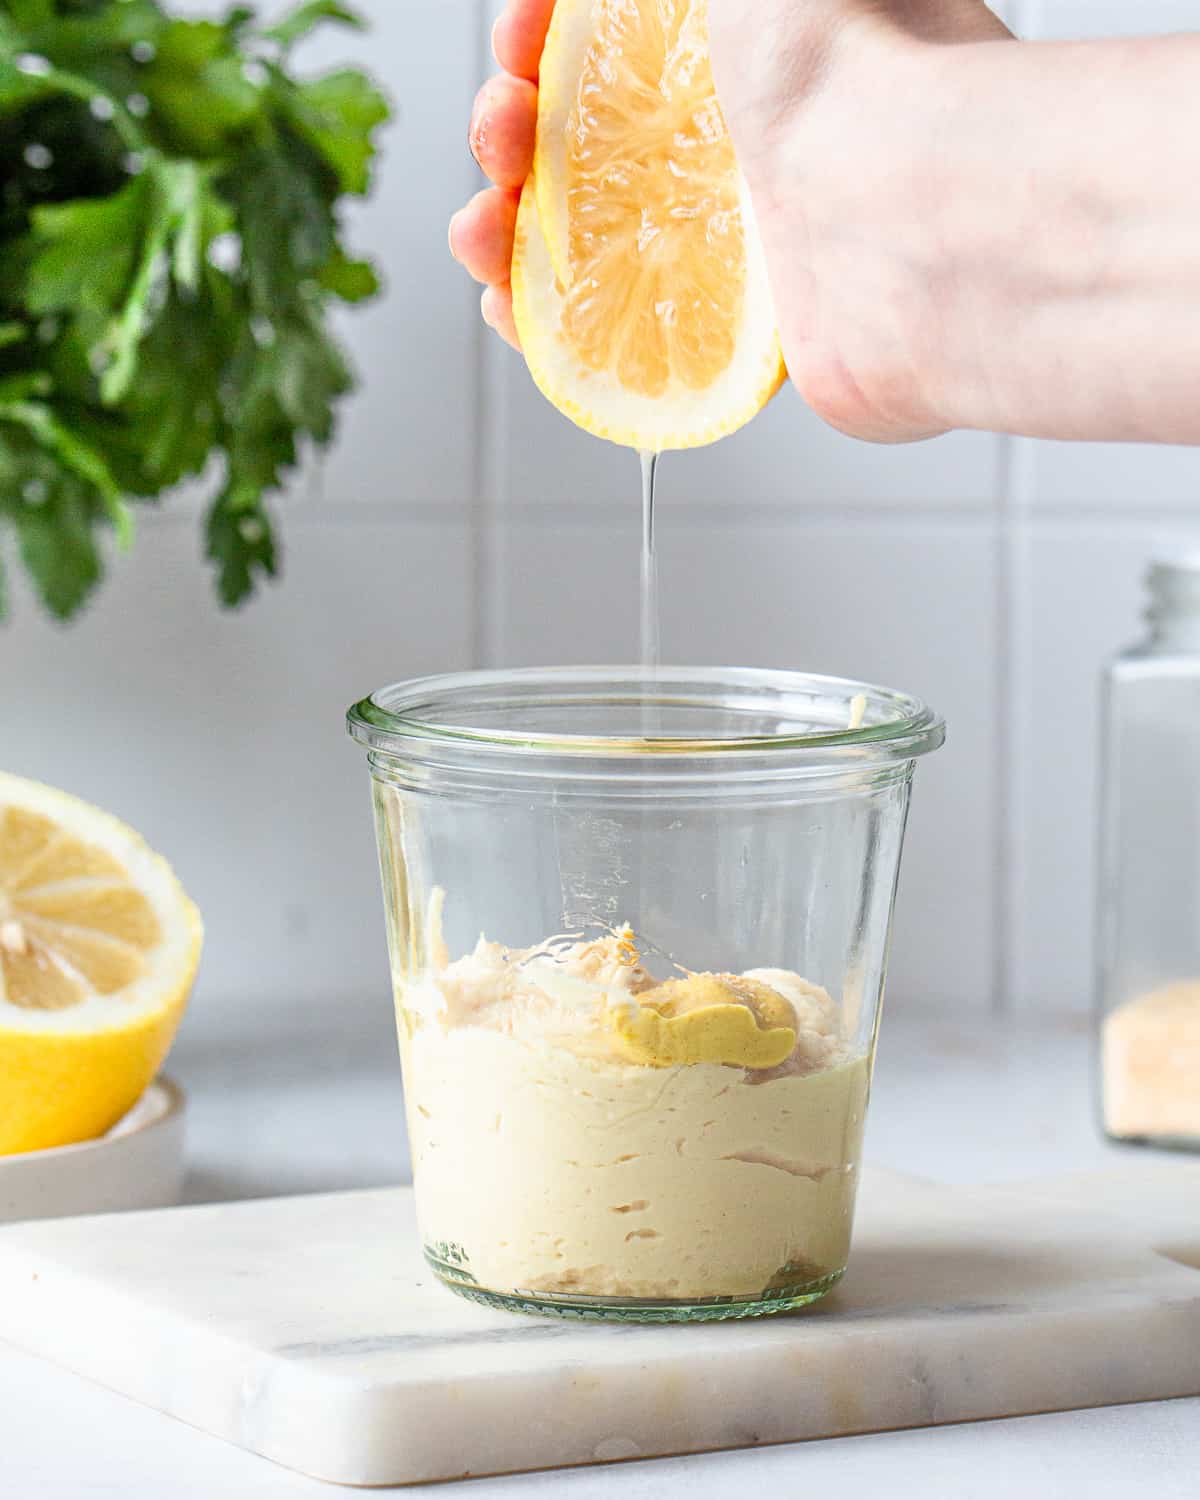 Hand adding lemon juice to a glass jar with hummus and mustard.